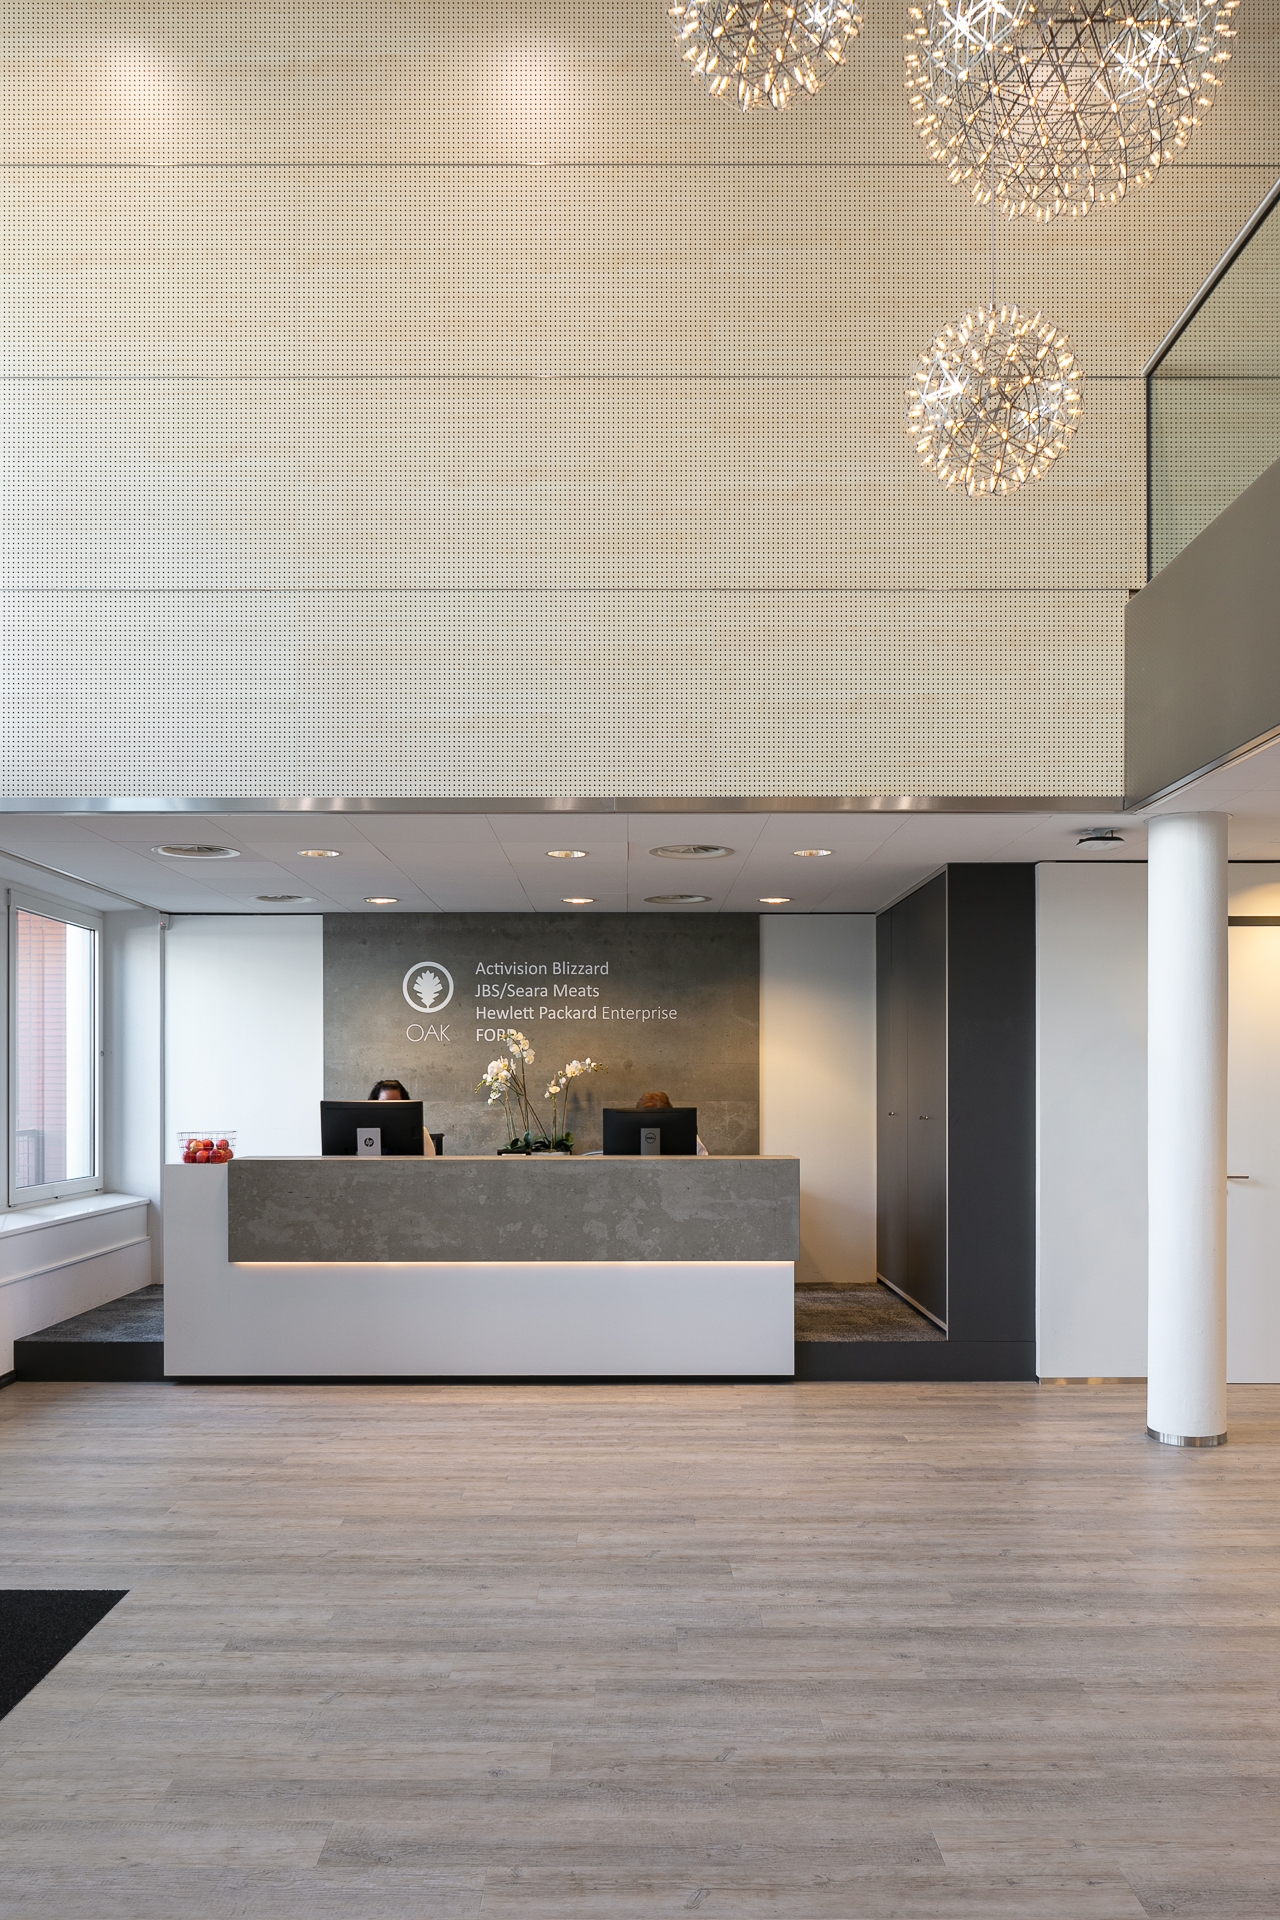 Amstelveen IT公司办公室|ART-Arrakis | 建筑室内设计的创新与灵感